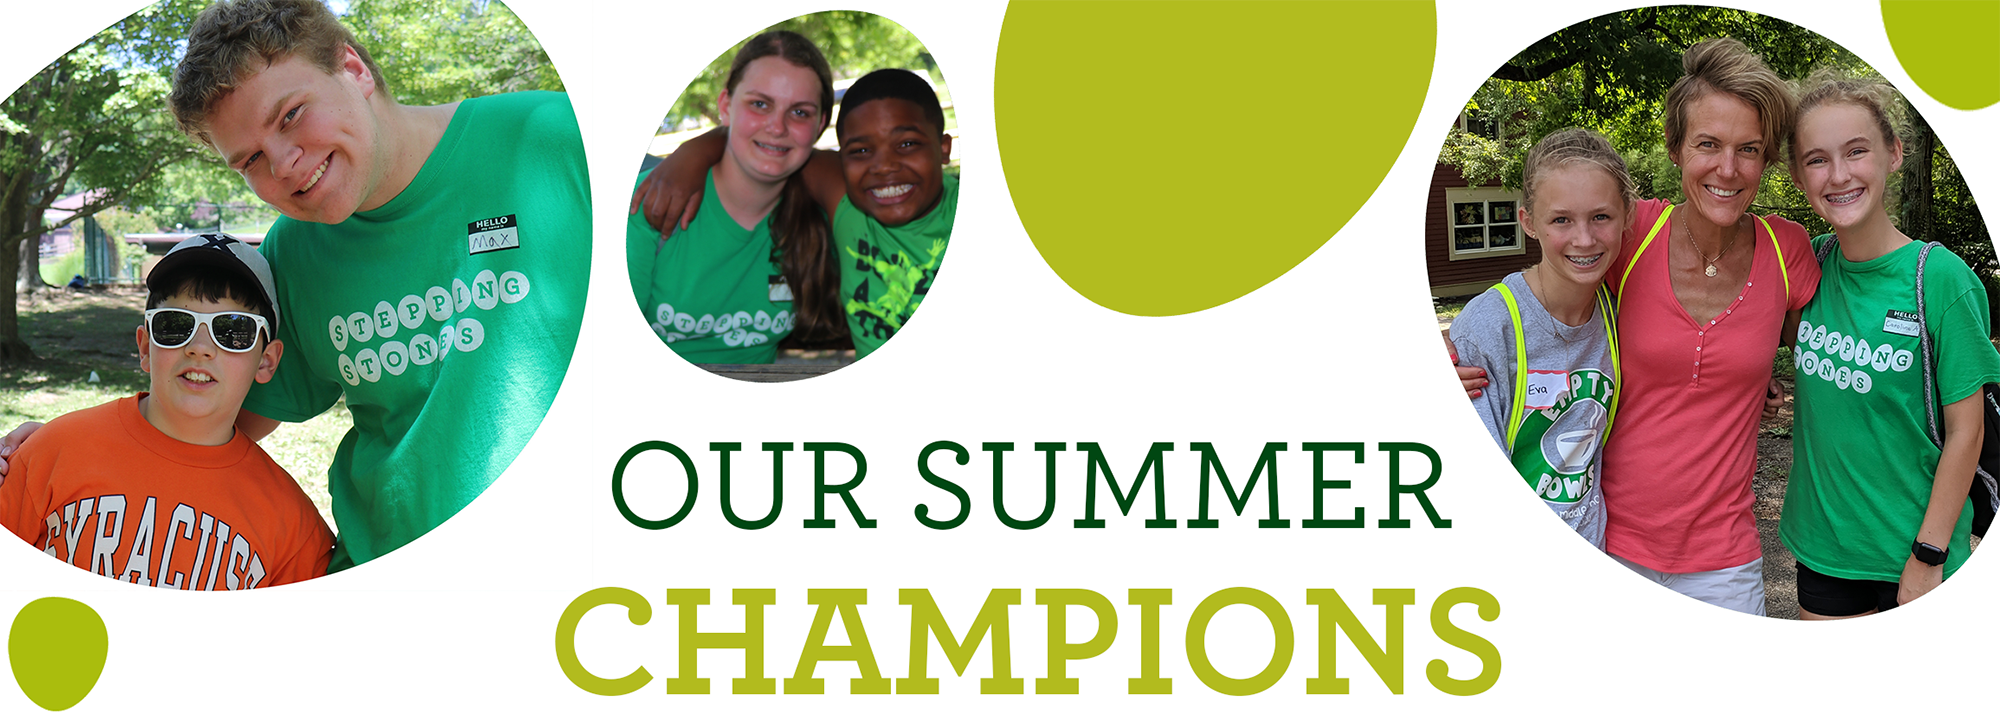 Summer Volunteer Champions at Stepping Stones I Cincinnati, Ohio